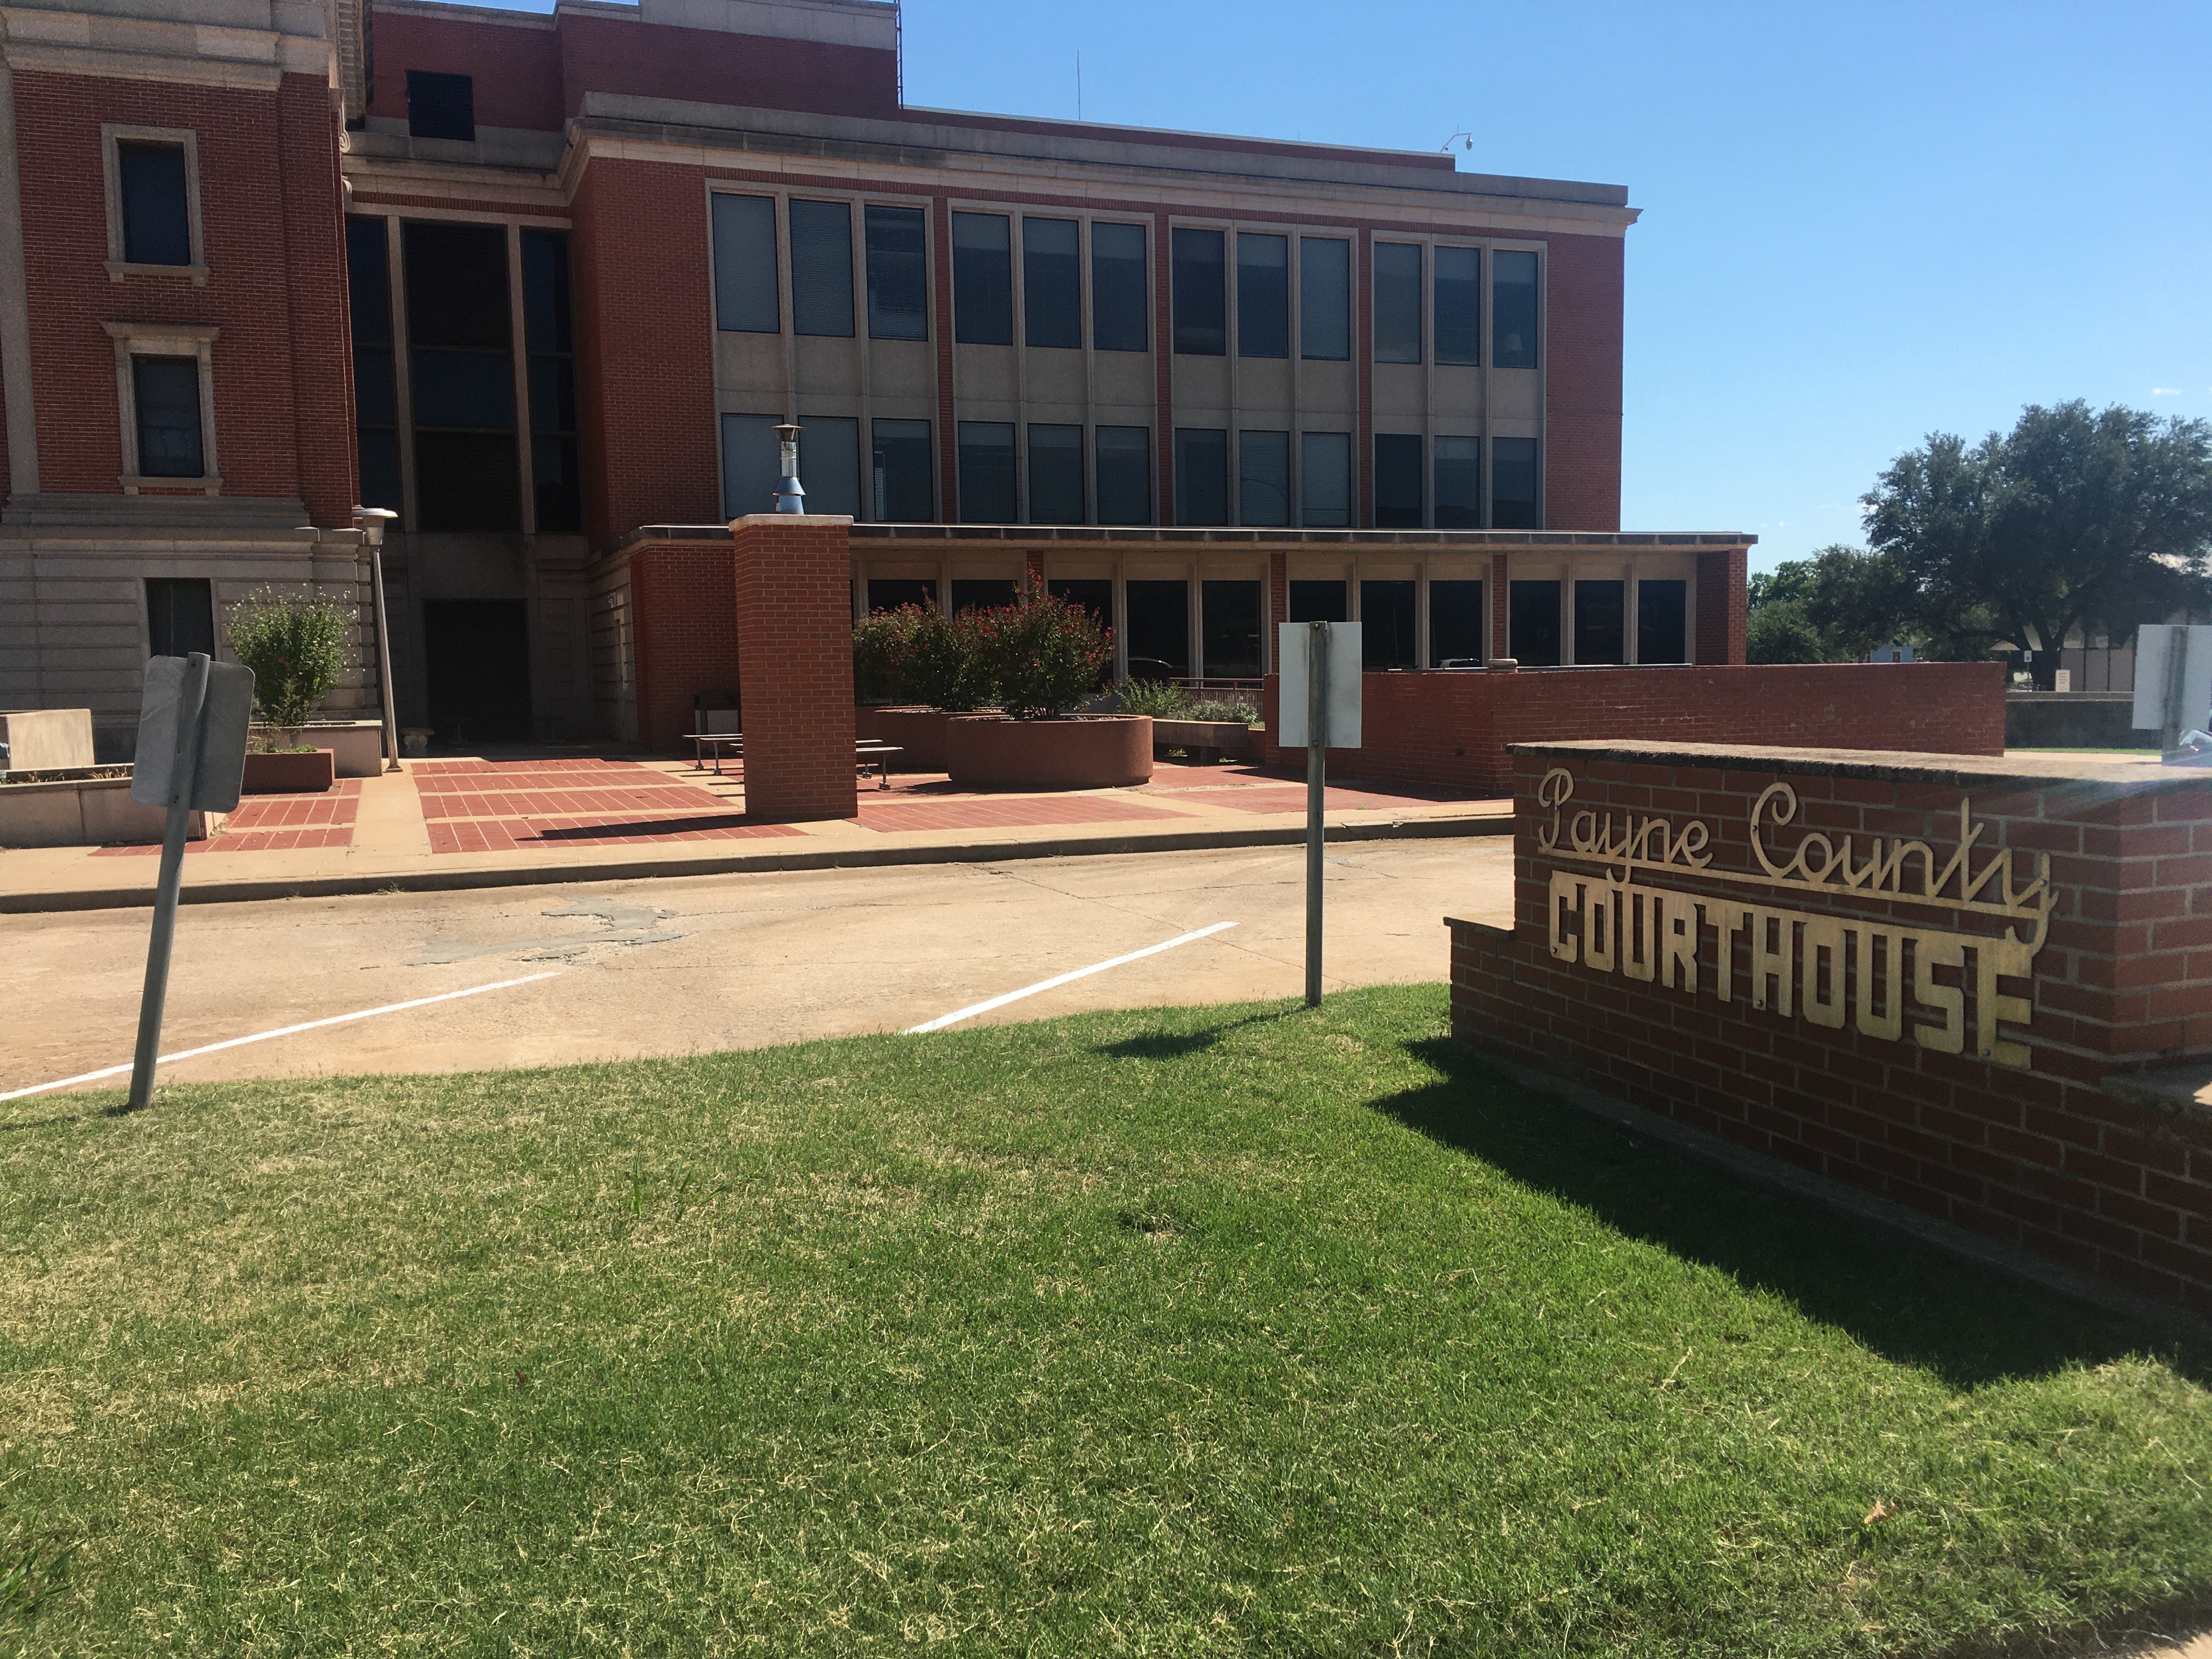 State Courthouse - Stillwater, Oklahoma